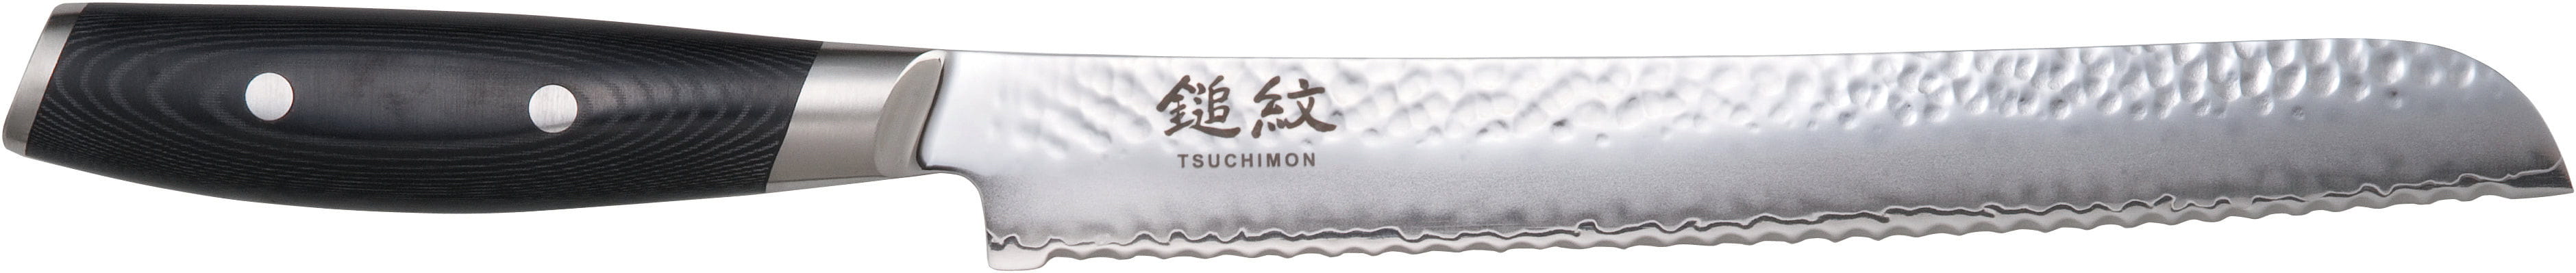 Nóż chlebowy Yaxell Tsuchimon, 23 cm